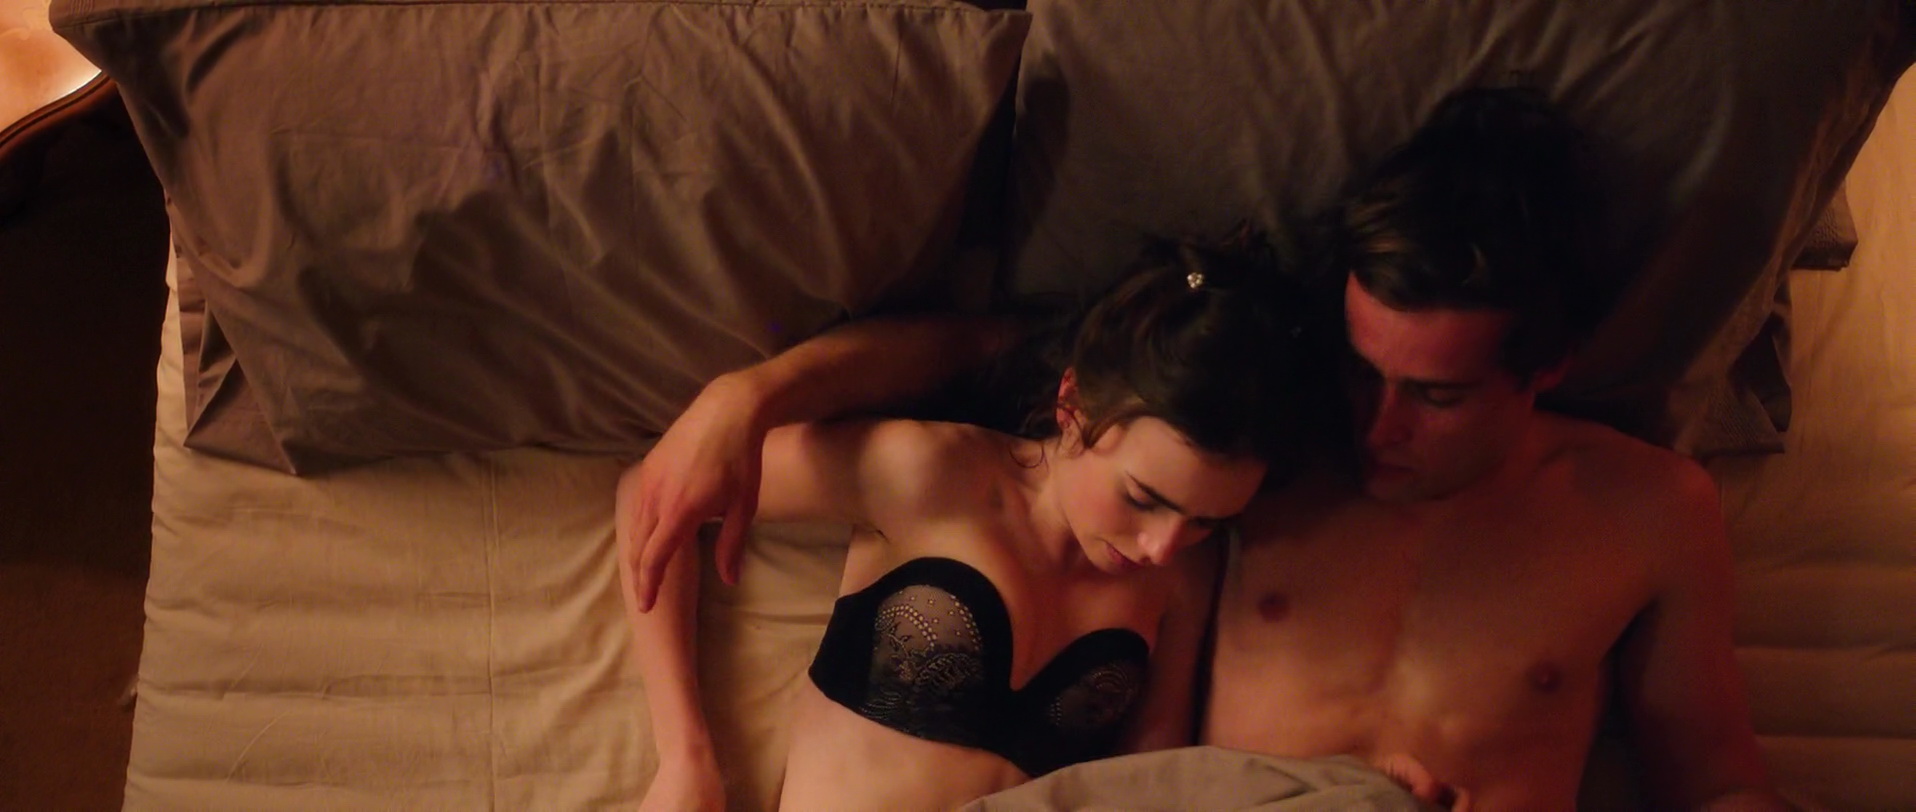 Lily Collins - Love, Rosie (2014) HD 1080p.